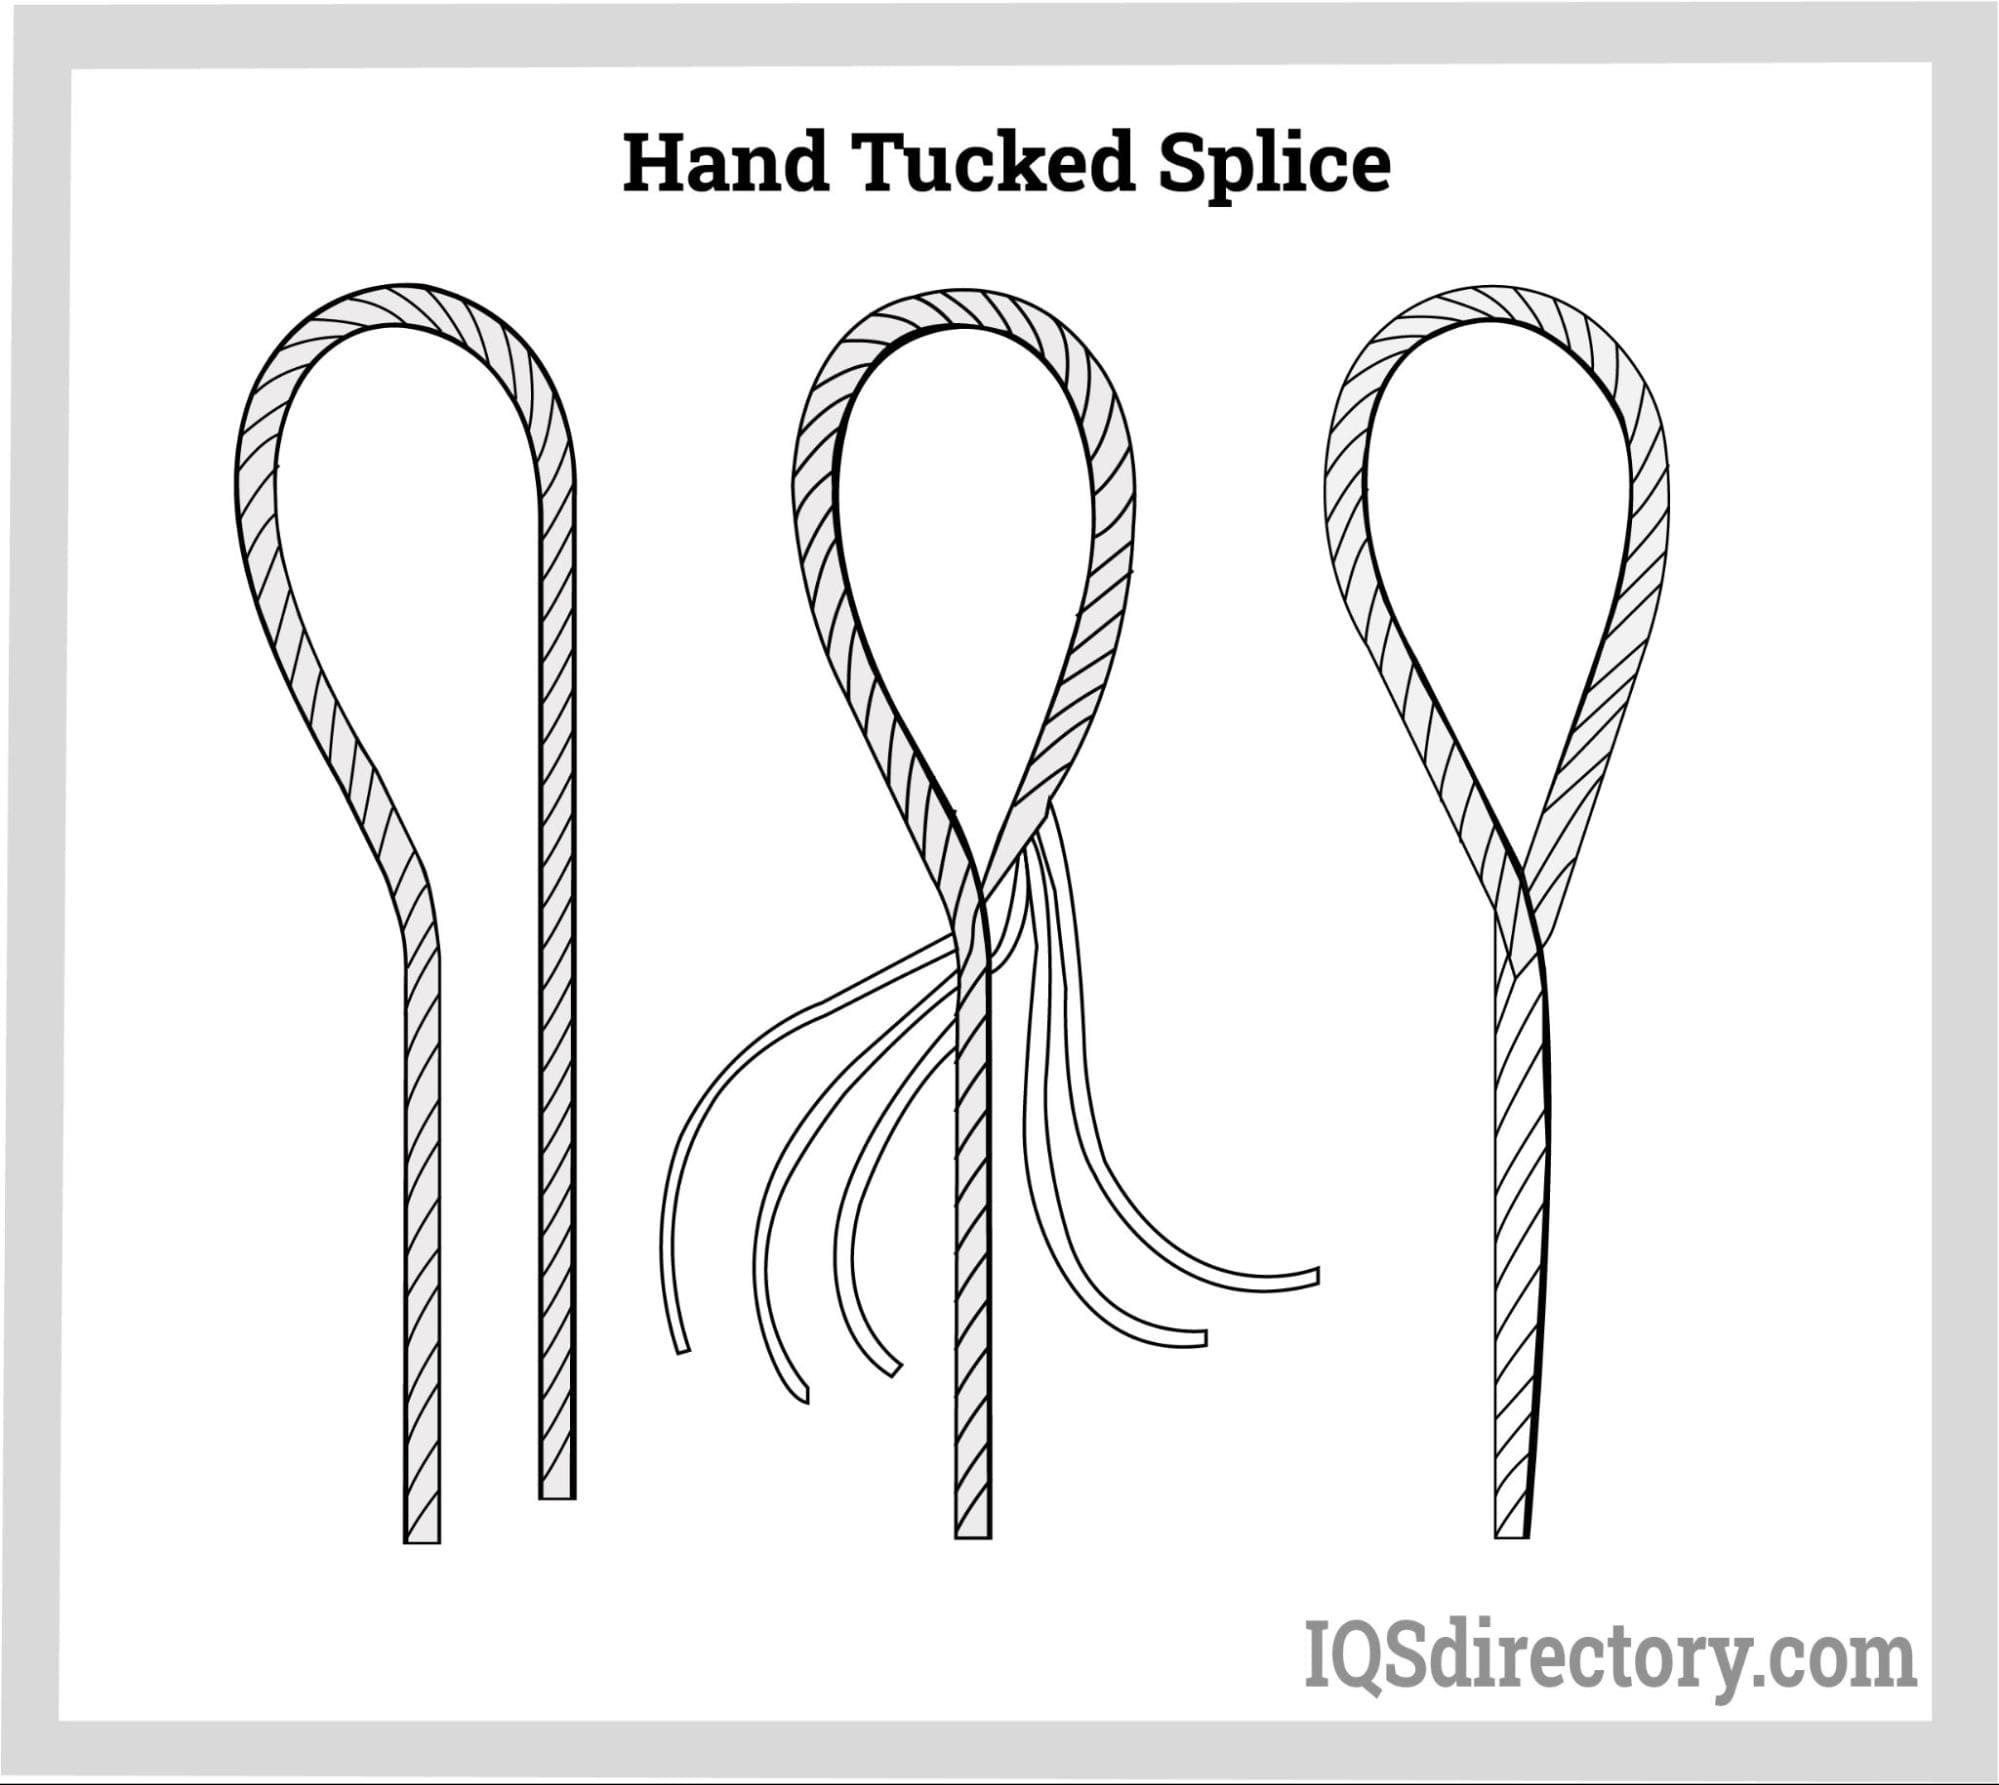 Hand Tucked Splice